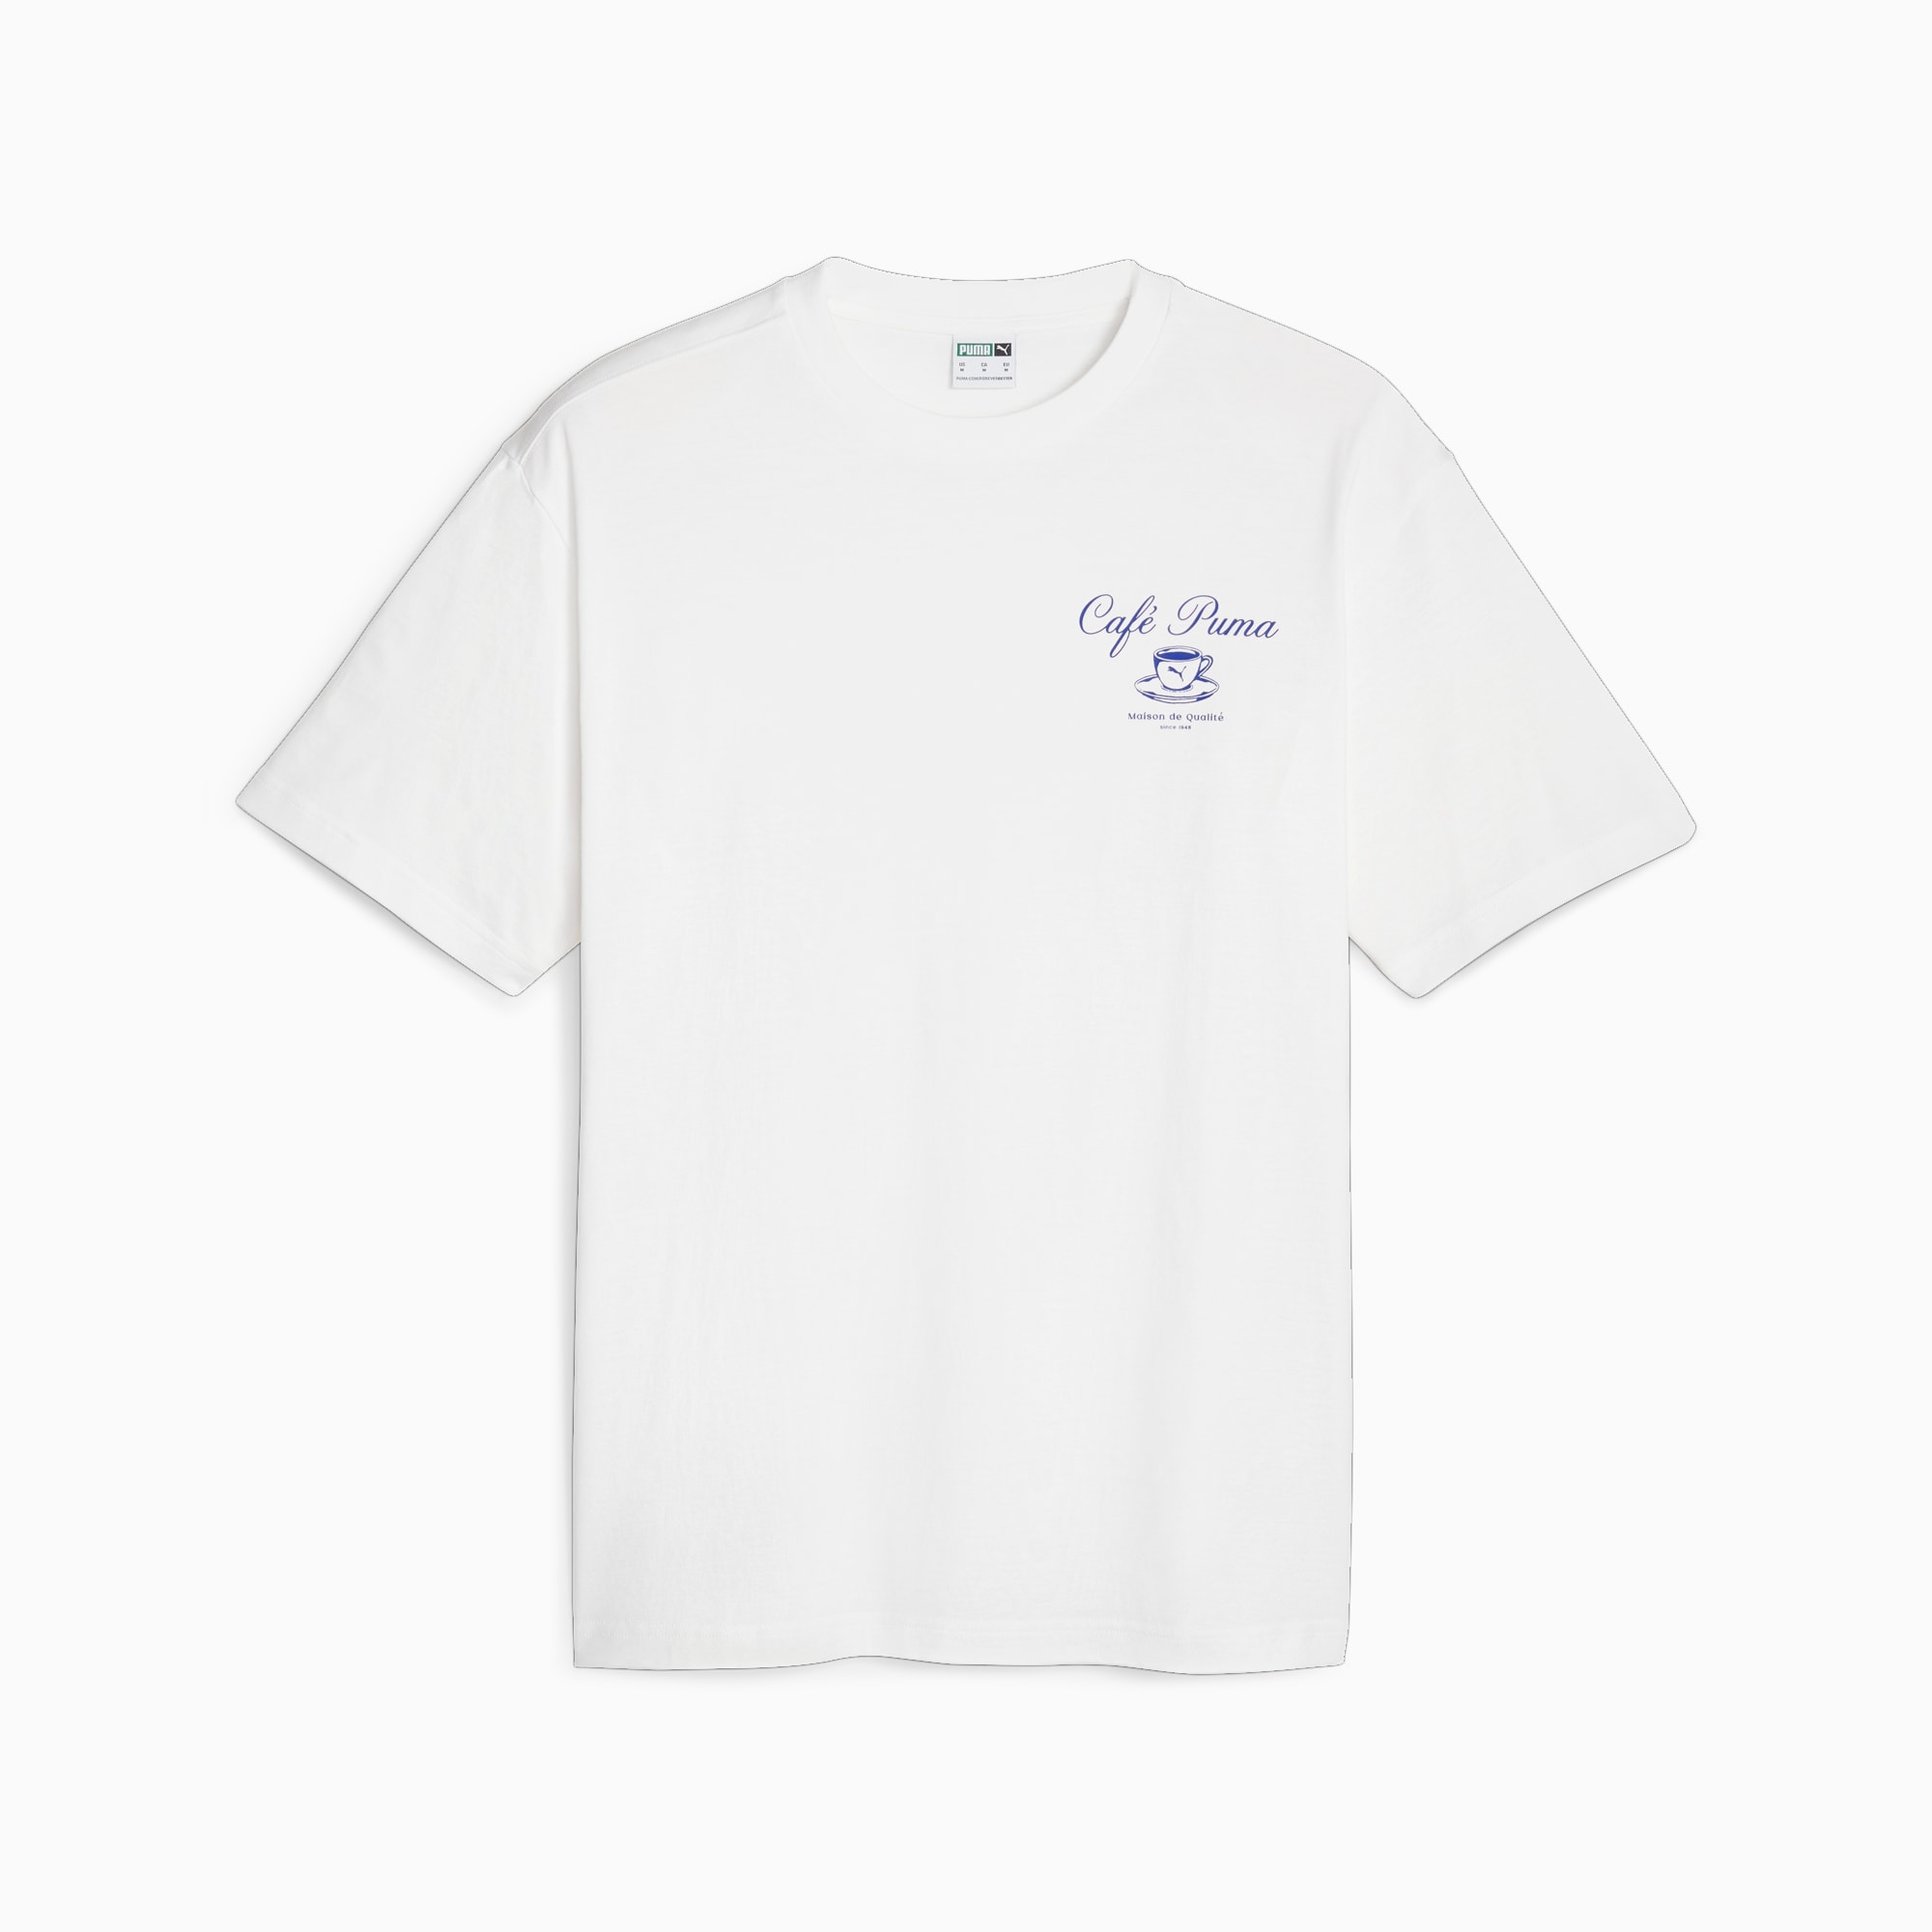 Classics Cafe PUMA Men's T-Shirt, White, Size XXS, Clothing